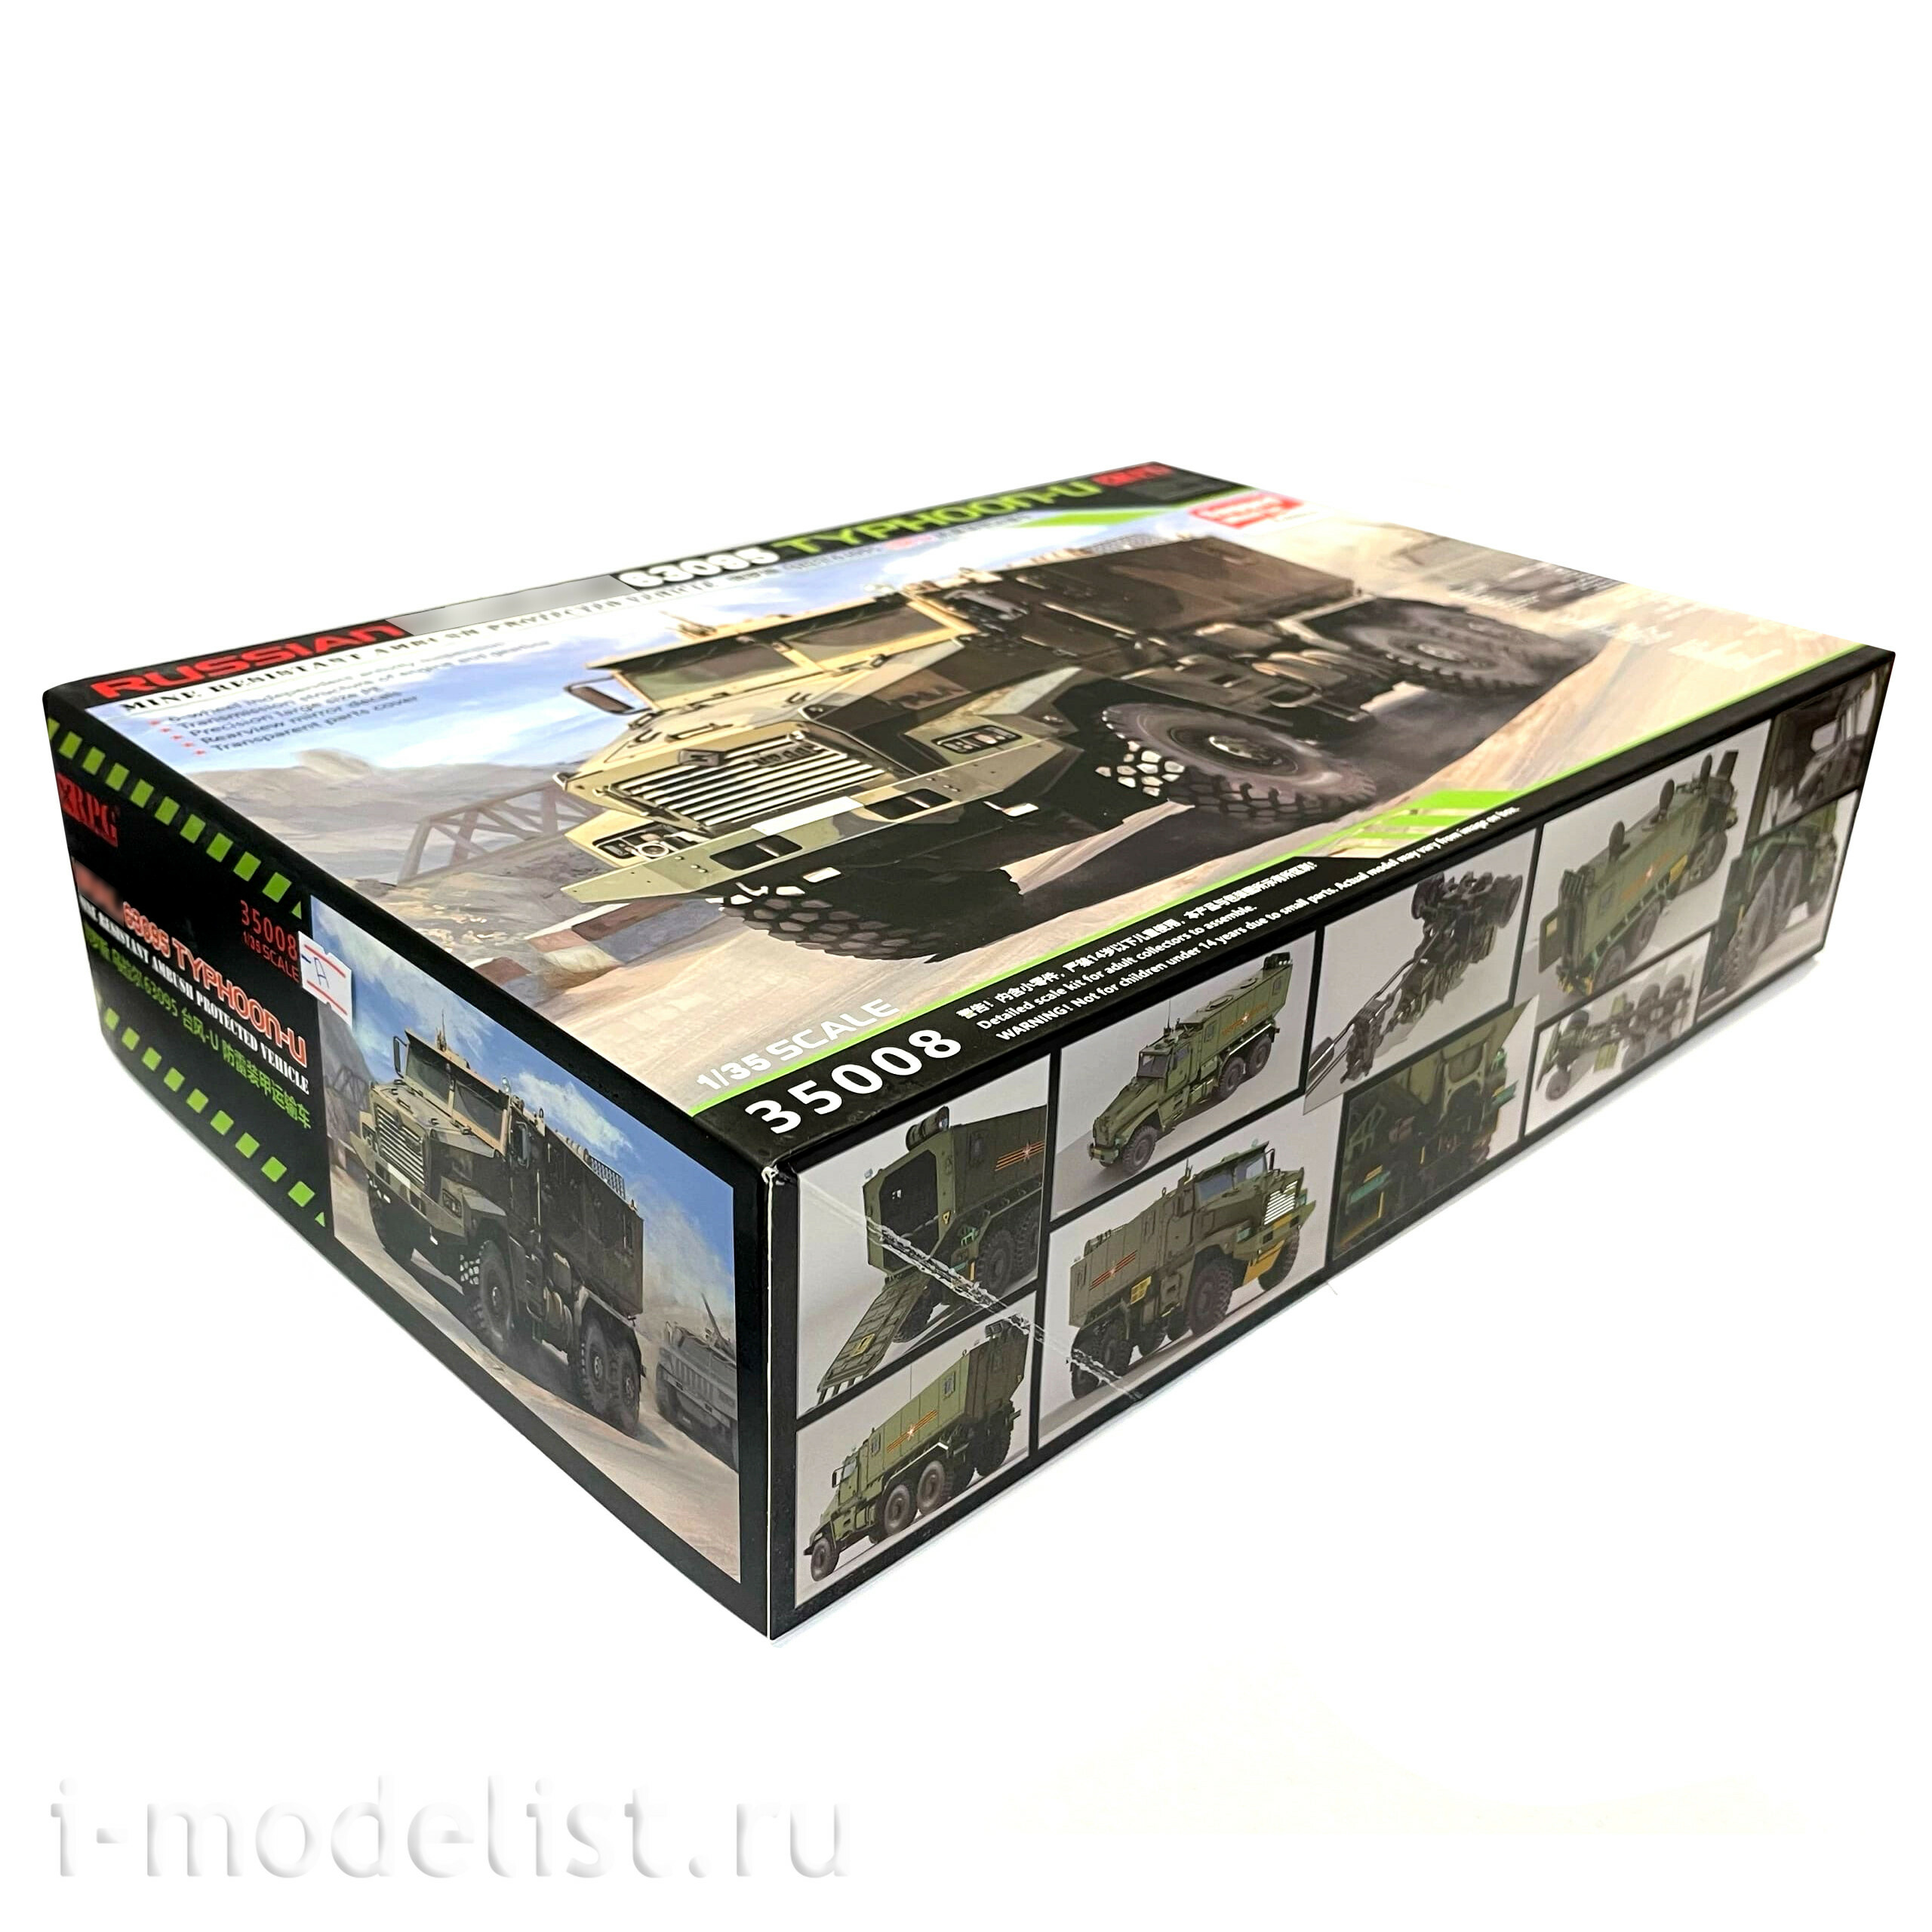 35008-A RPG-MODEL 1/35 Russian URAL-63095 Typhoon-U w/Sagged wheel set x6 PCS [Limited Edition]